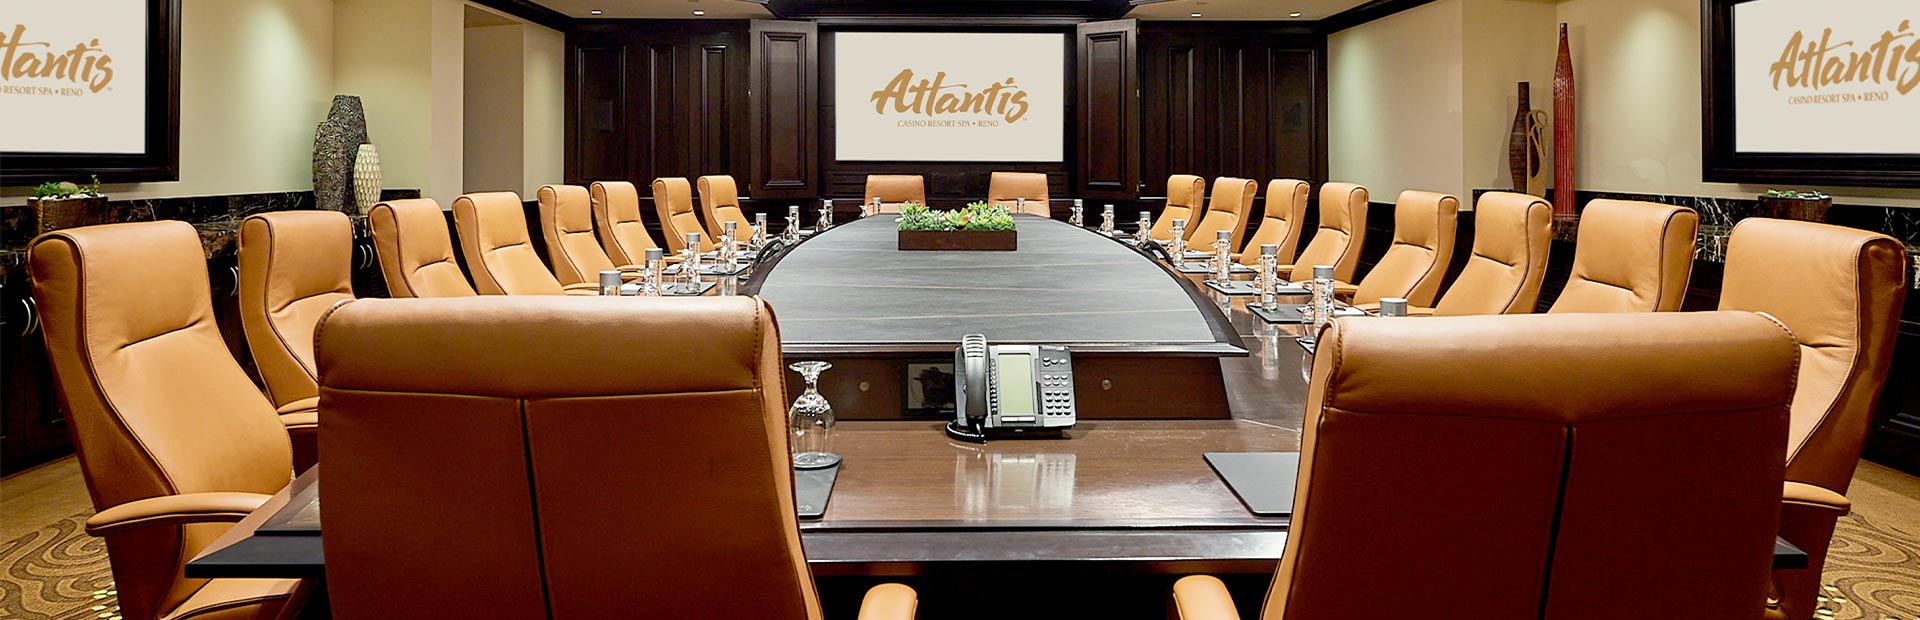 The Atlantis Boardroom